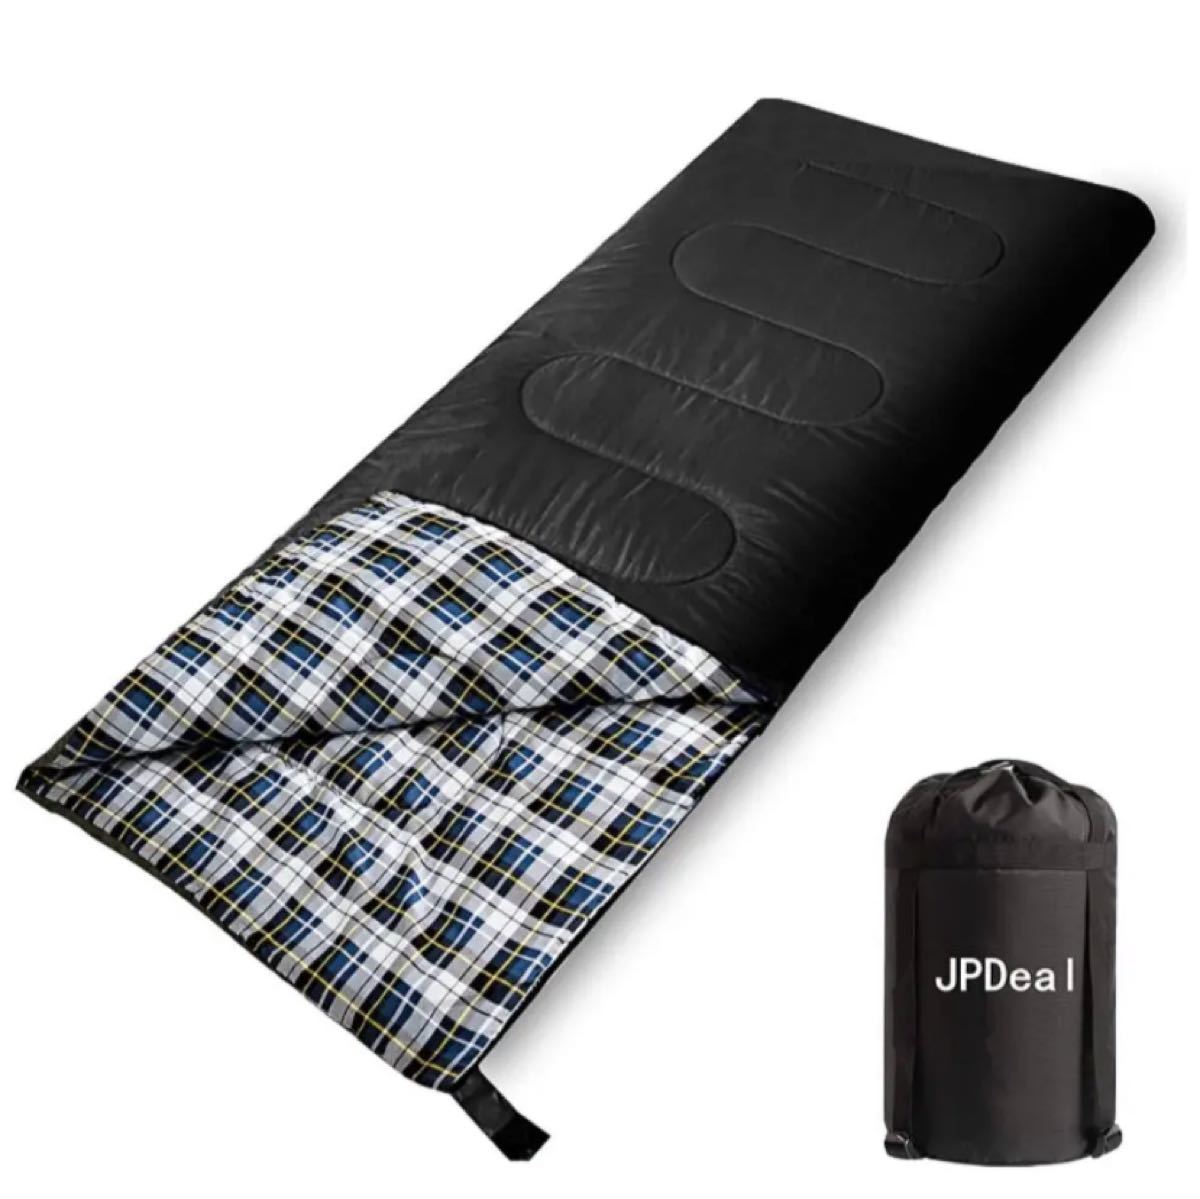 JPDeal 寝袋 シュラフ シュラフカバー スリーピングバッグ 封筒型